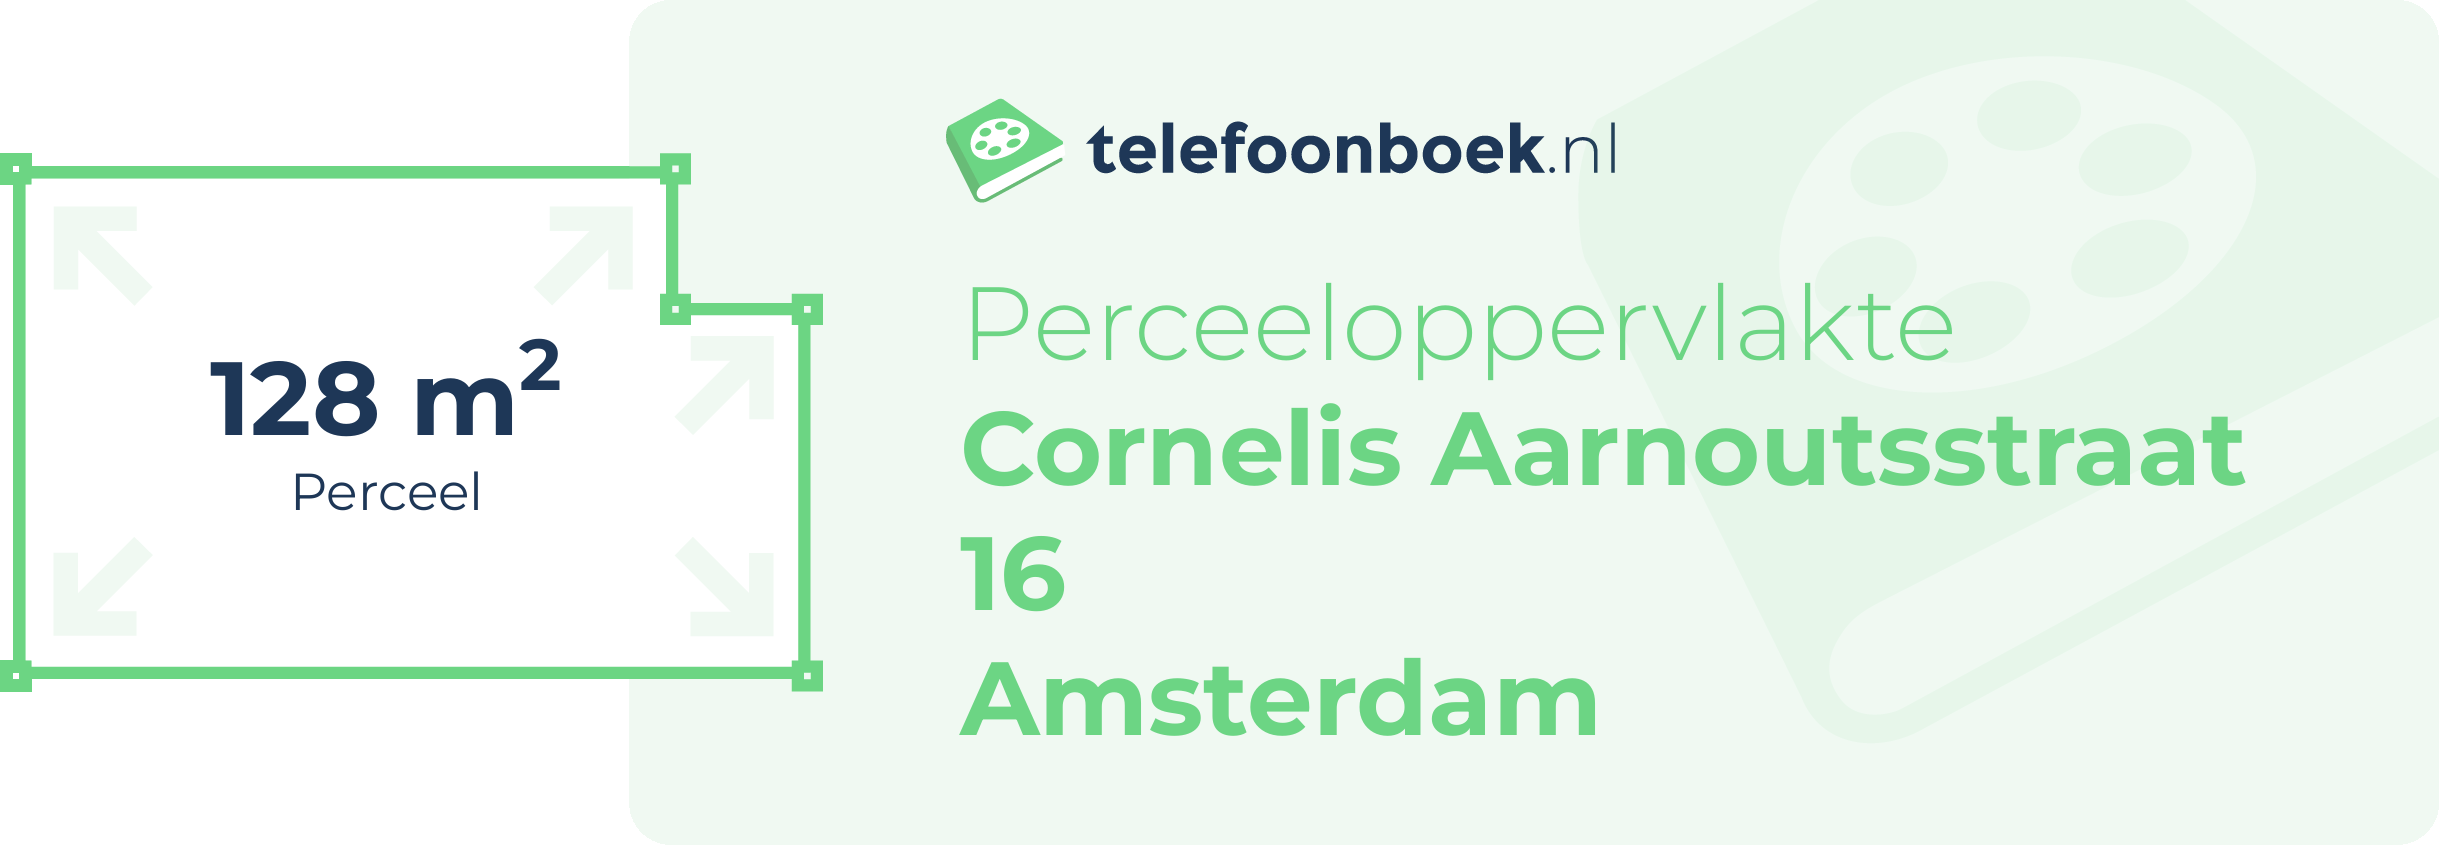 Perceeloppervlakte Cornelis Aarnoutsstraat 16 Amsterdam